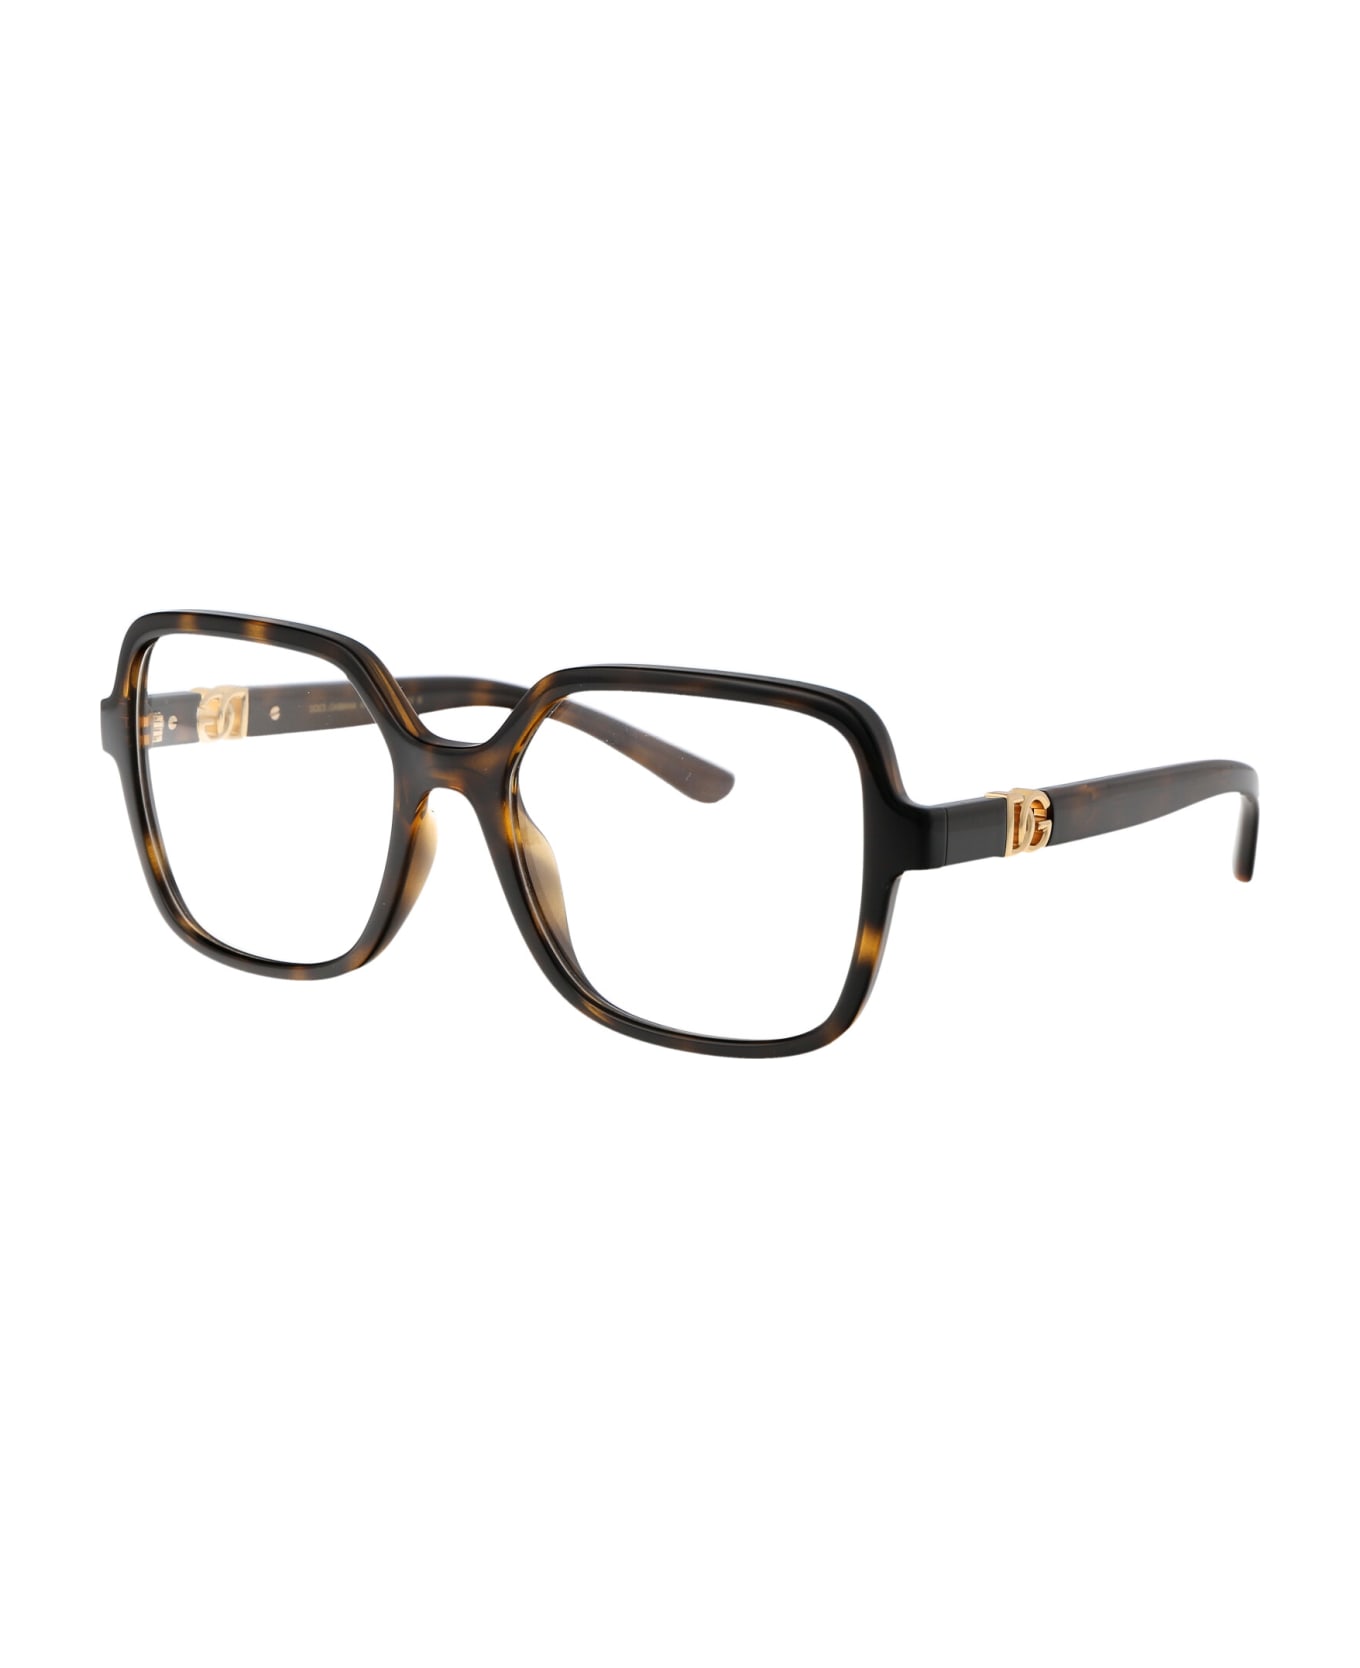 Dolce & Gabbana Eyewear 0dg5105u Glasses - 502 HAVANA アイウェア